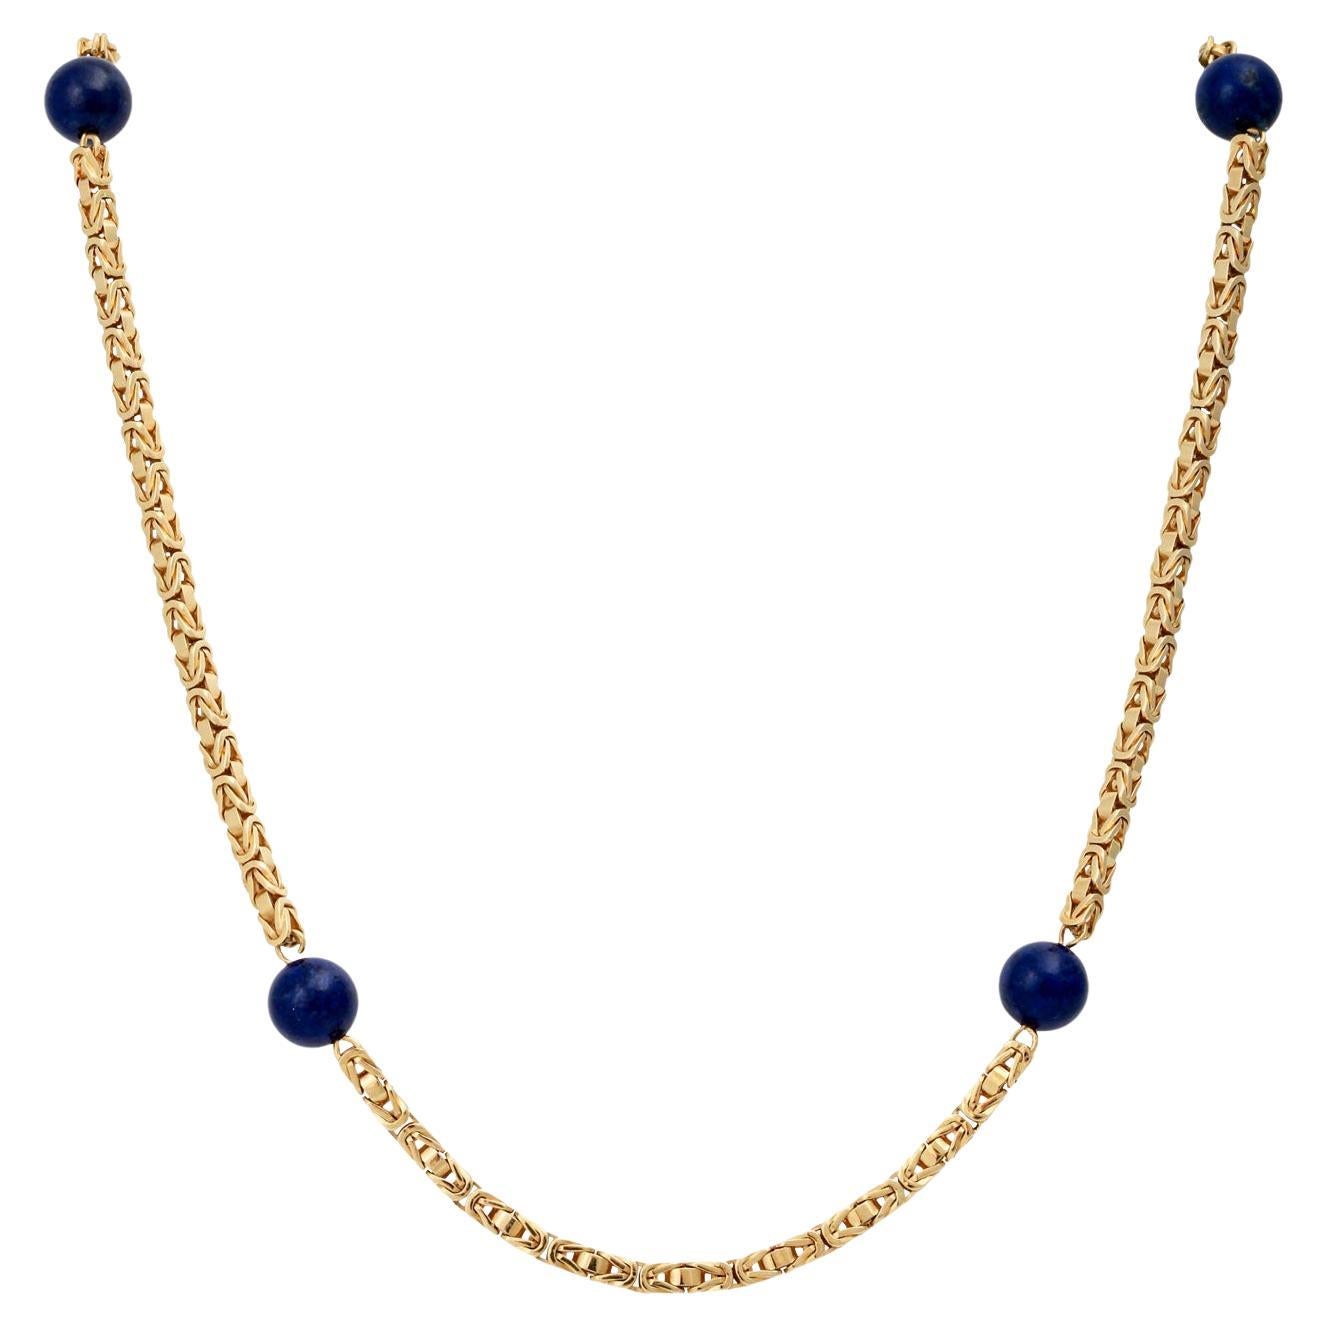 Byzantine chain with 6 lapis lazuli beads. For Sale